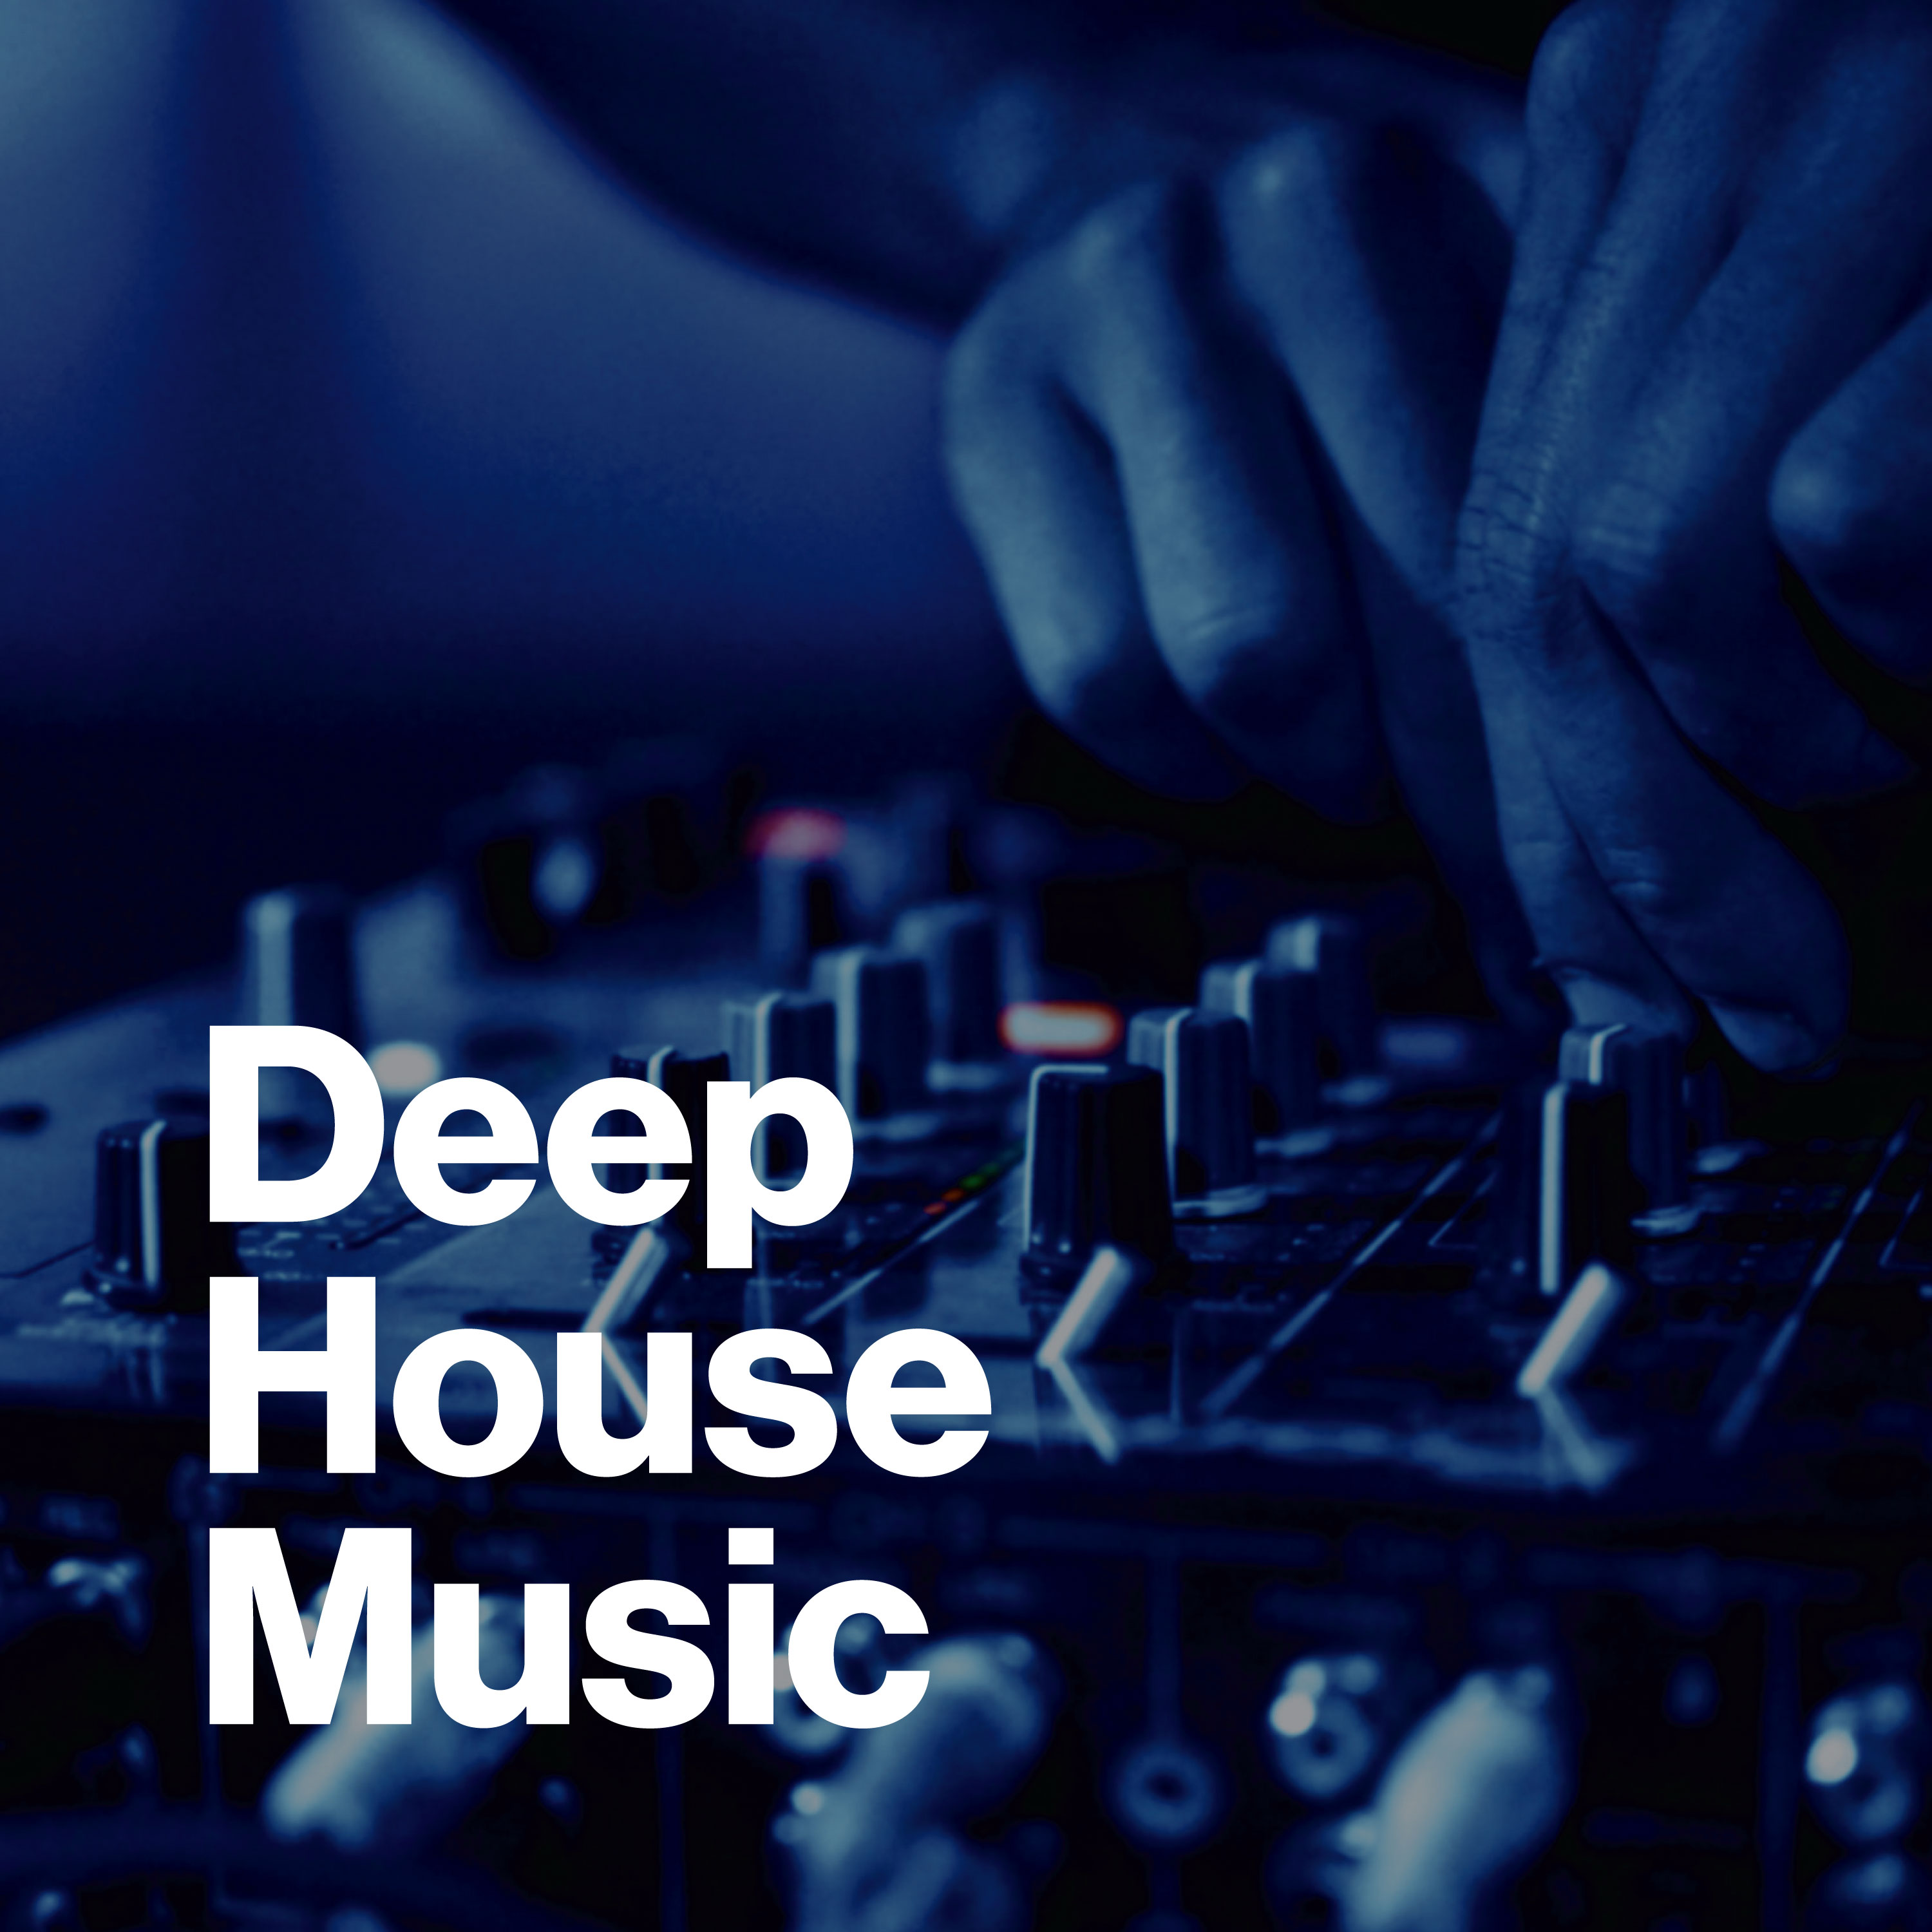 Deep house music музыка. Дип Хаус. Deep House Music. Фото Deep House Music. Deep House обложка альбома.